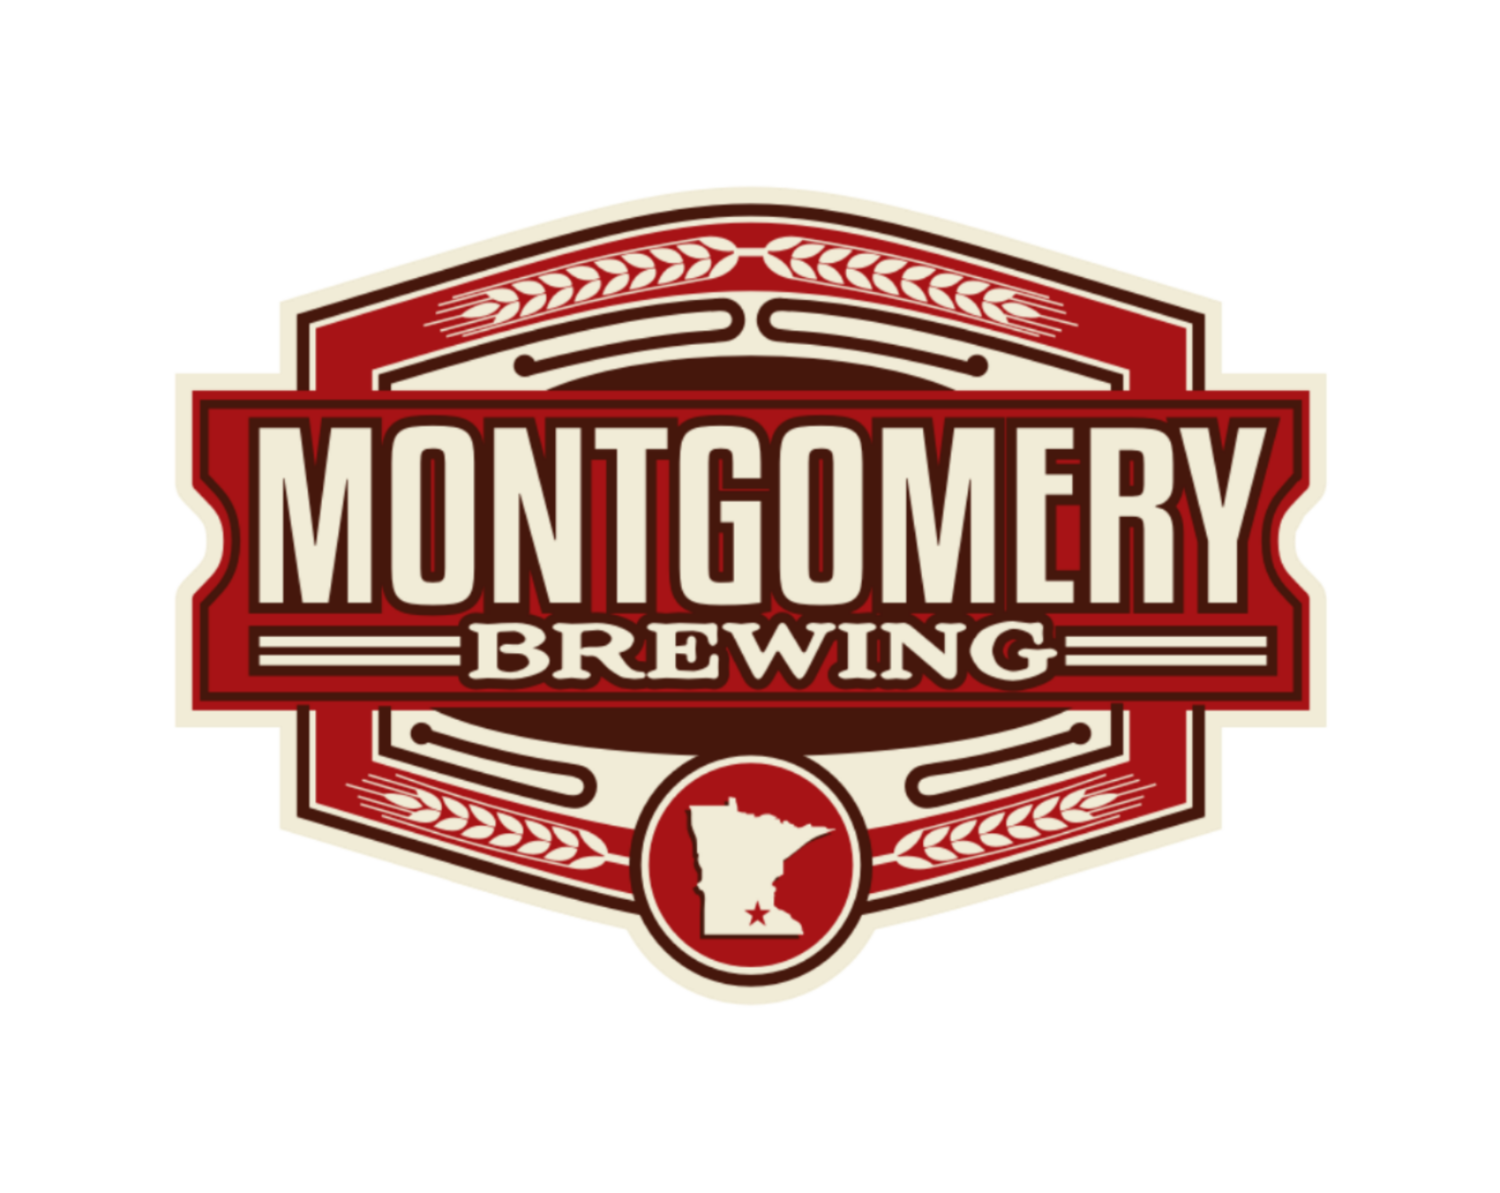 Montgomery Brewing